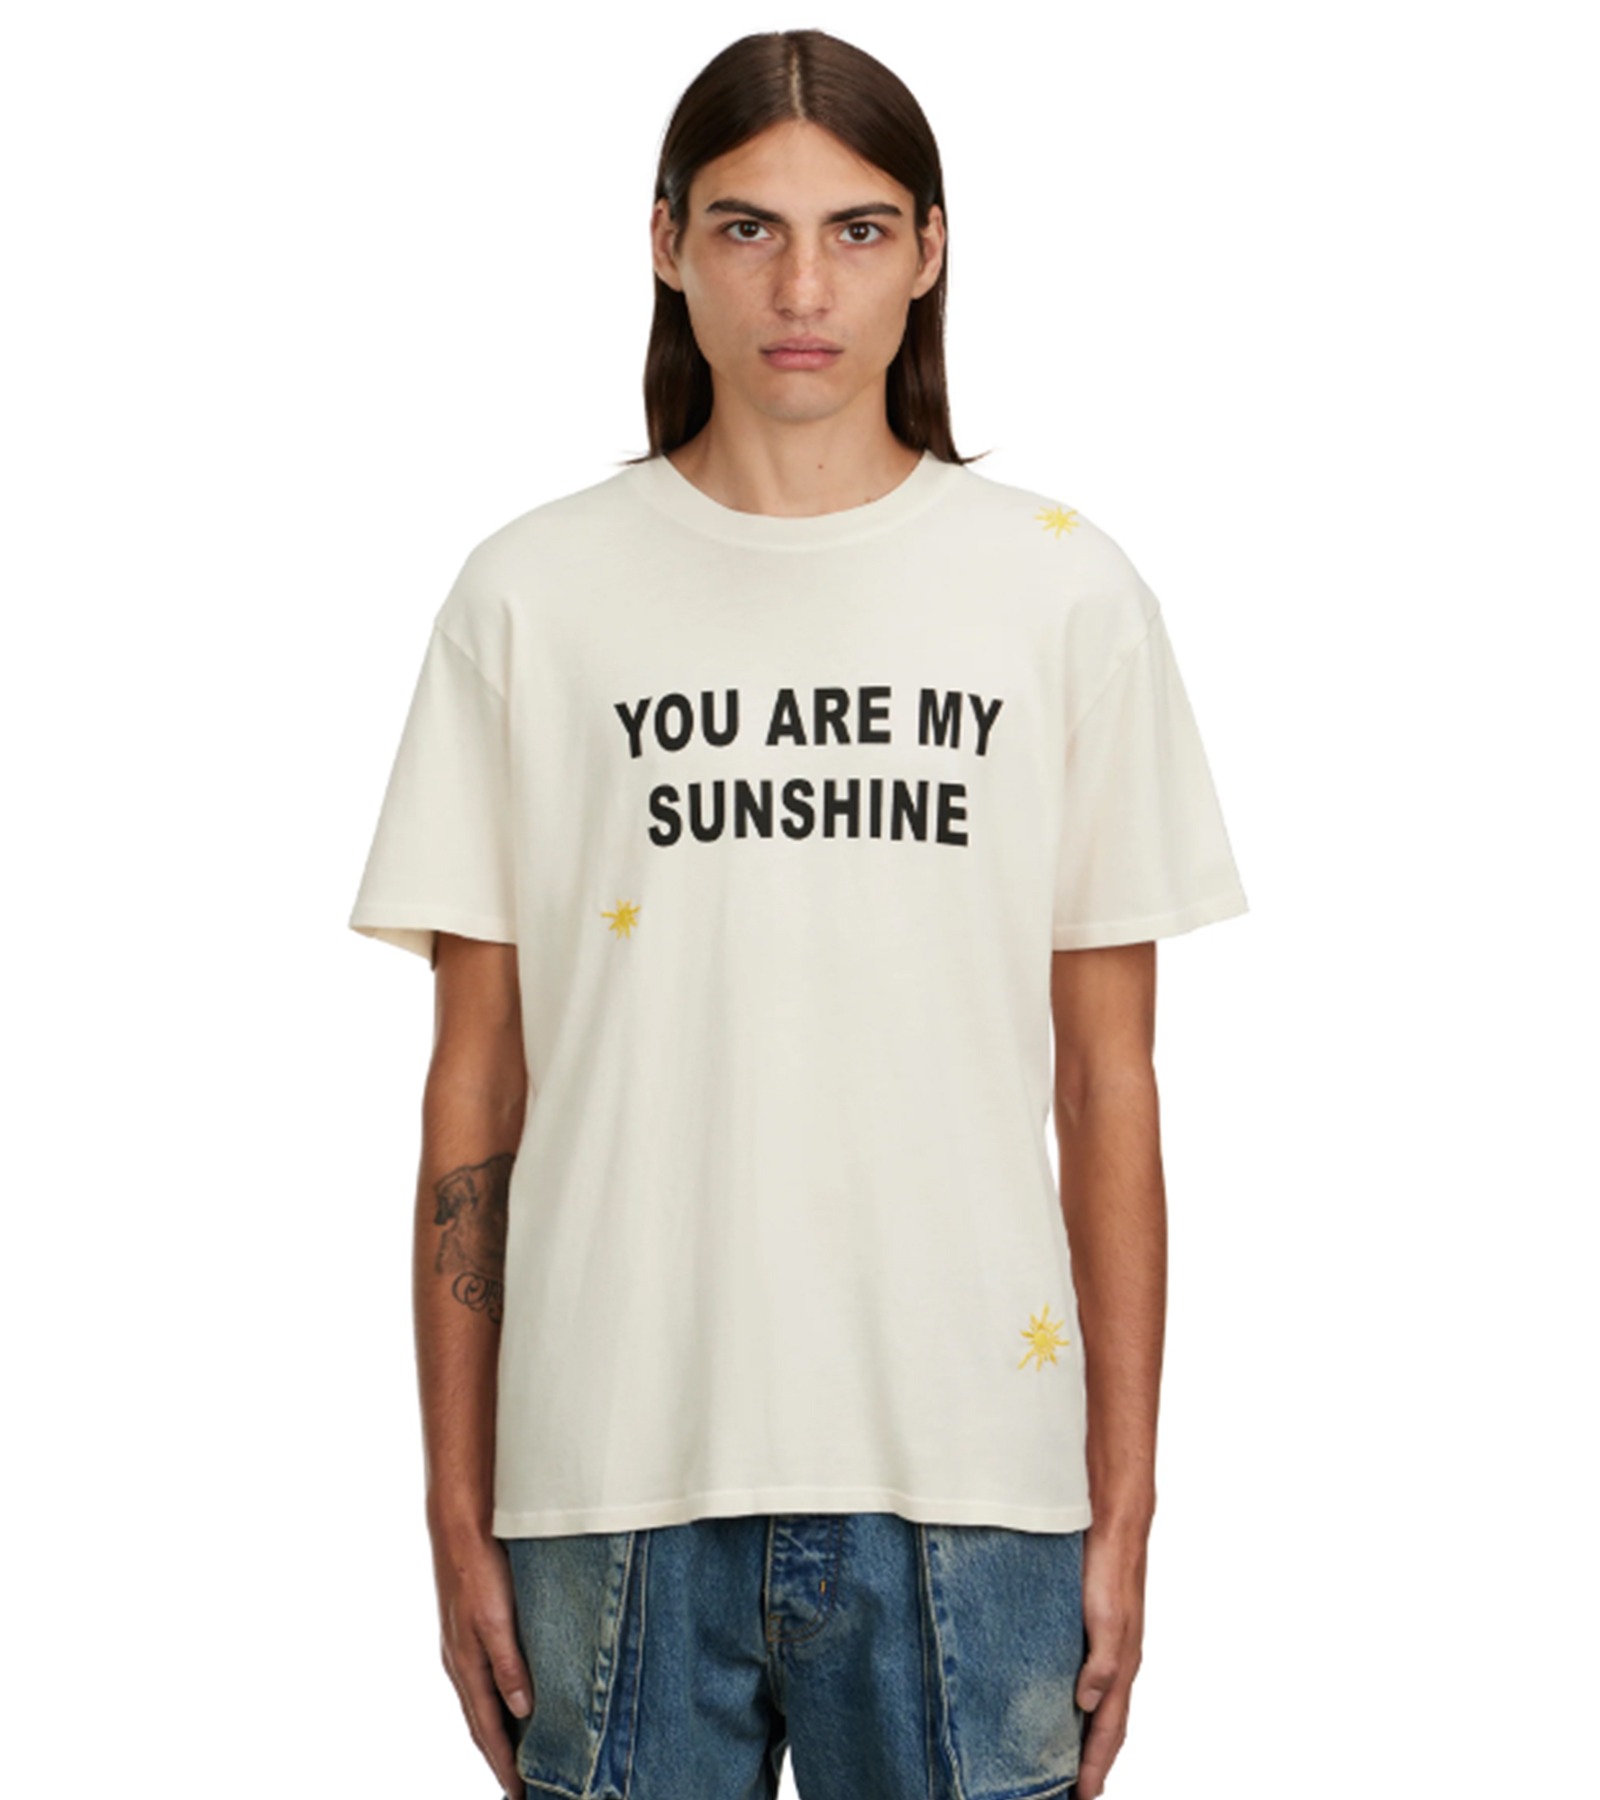 YOU ARE MY SUNSHINE T-SHIRT